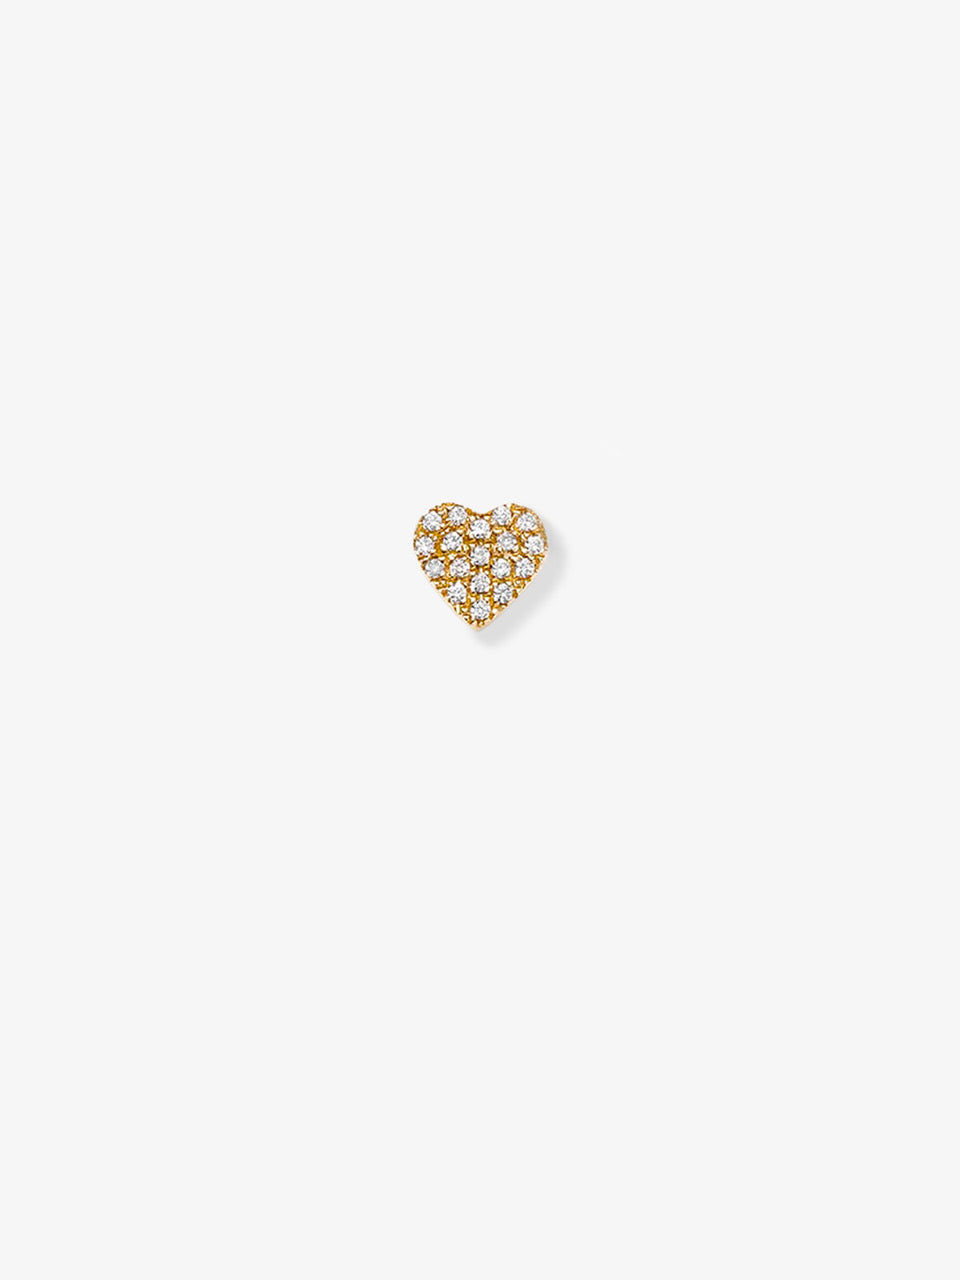 Heart Stud Single Earring in Diamonds and 18k Gold